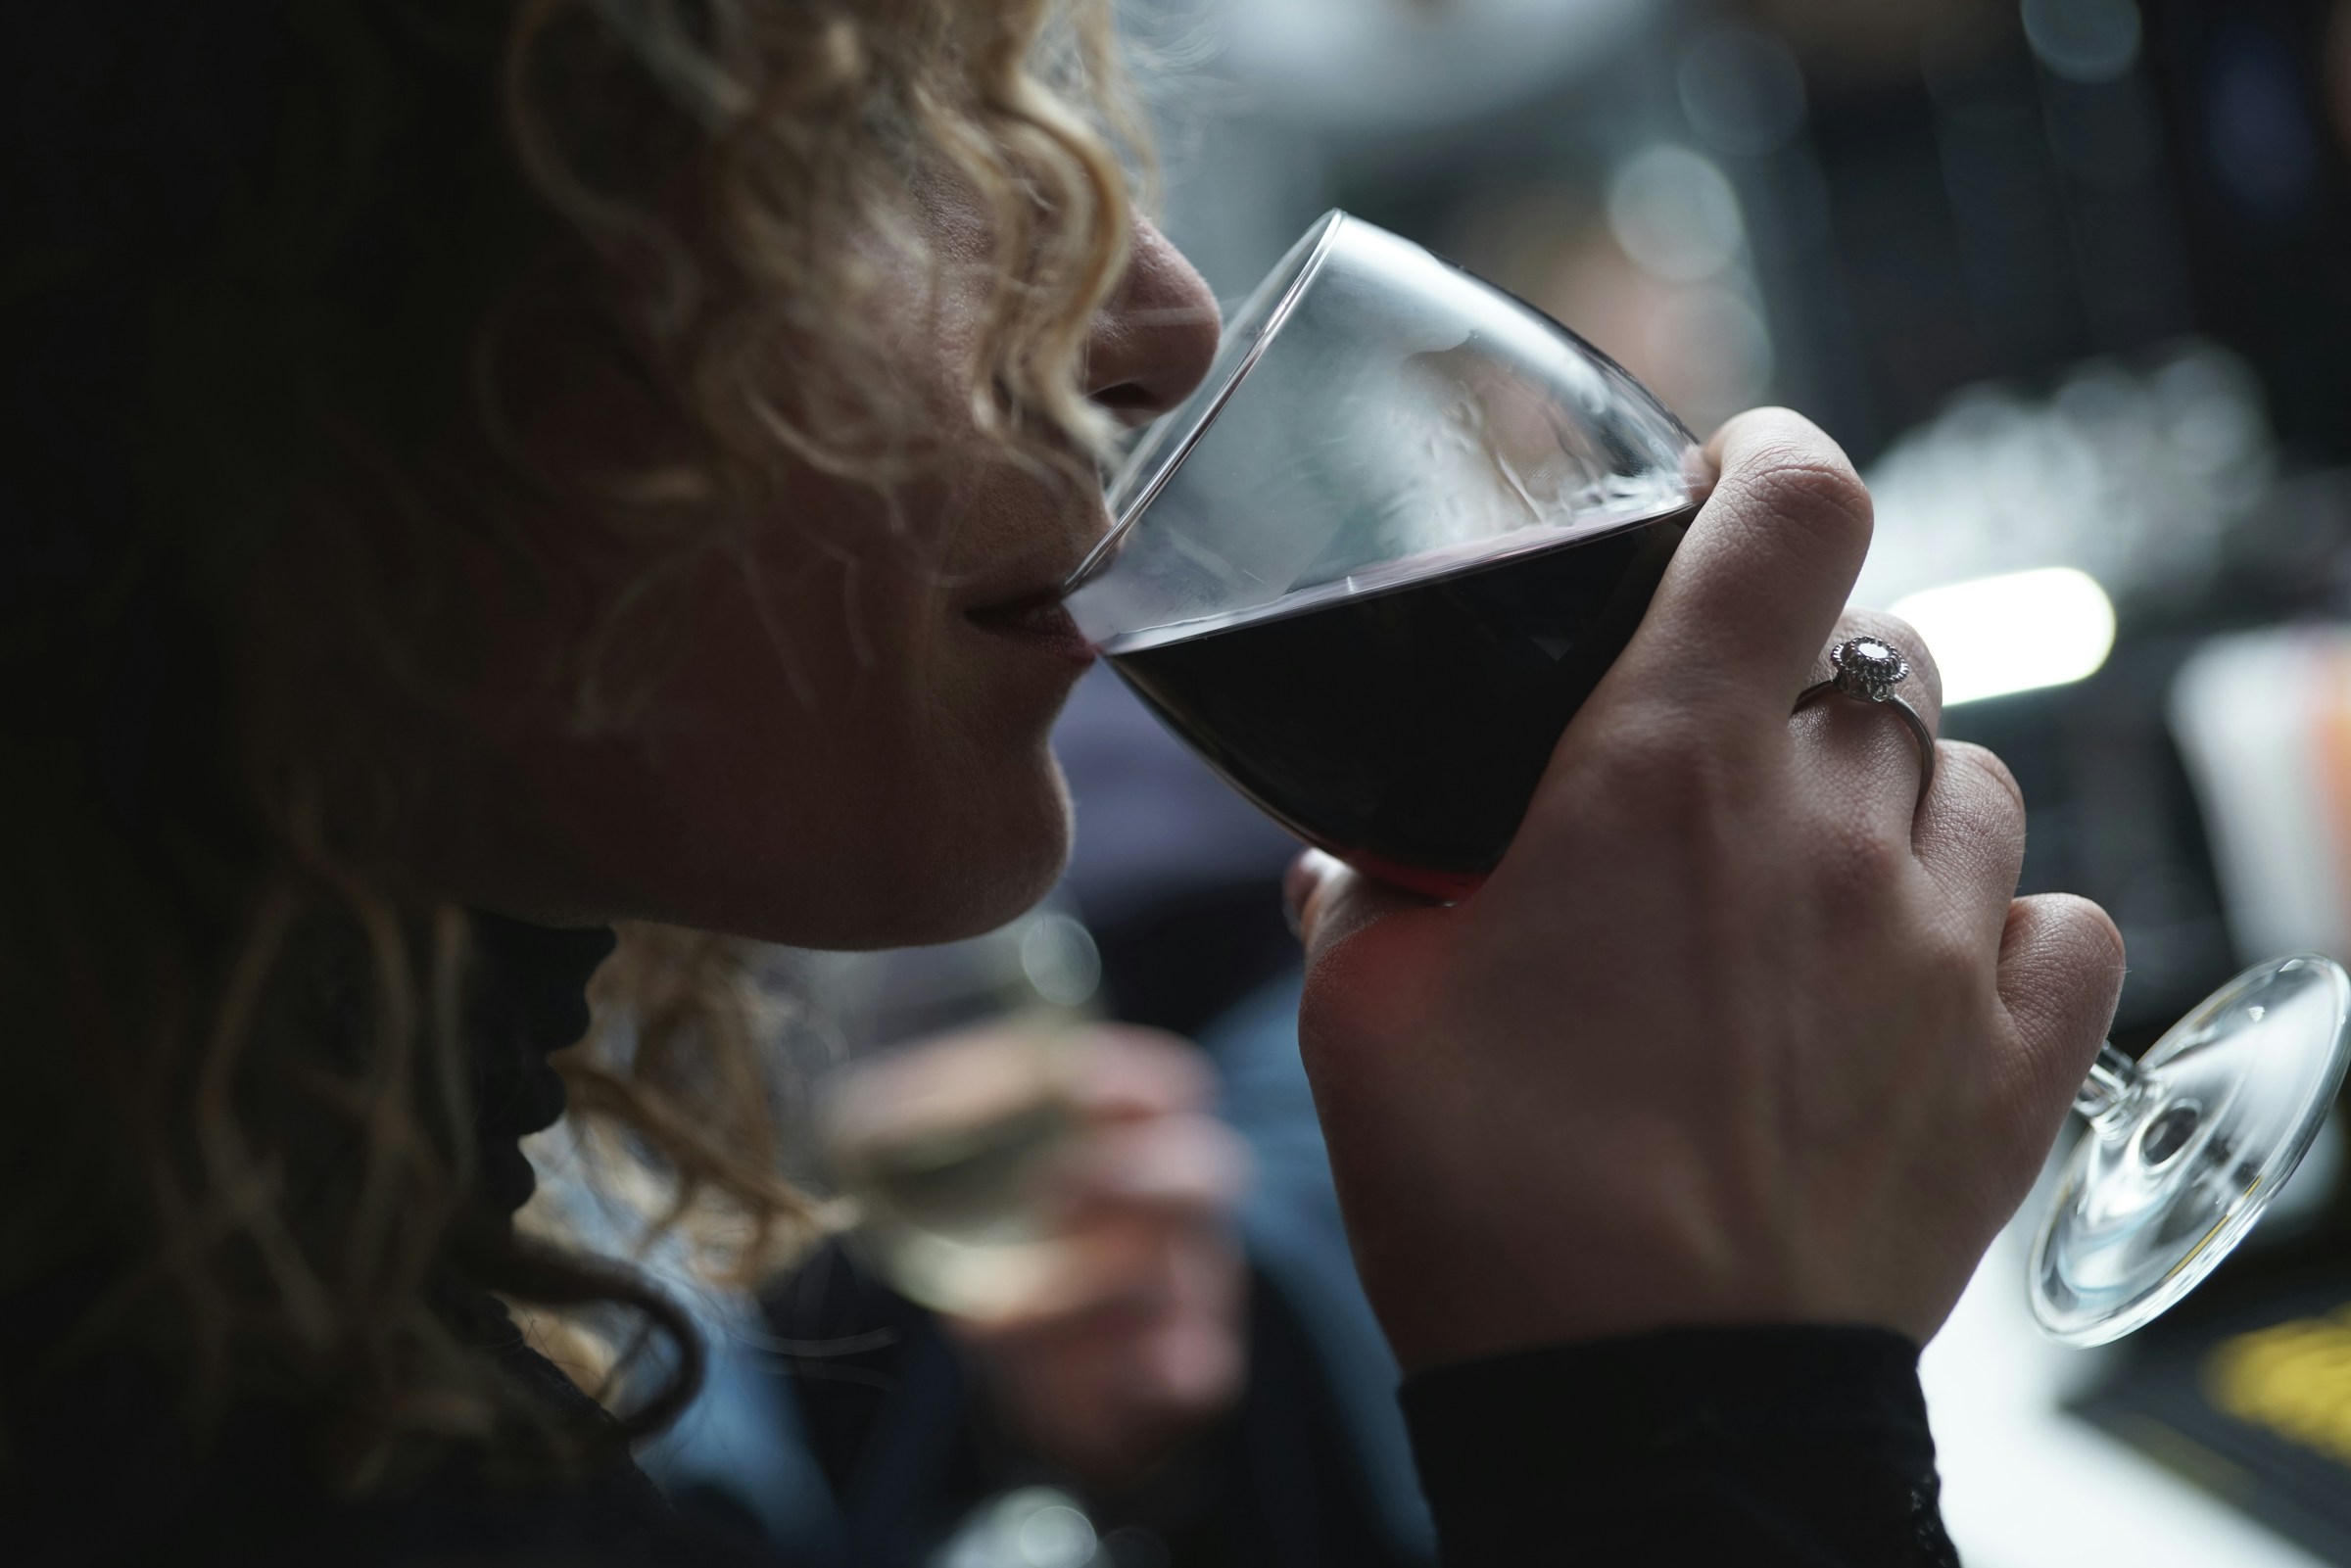 A woman drinking wine | Source: Unsplash